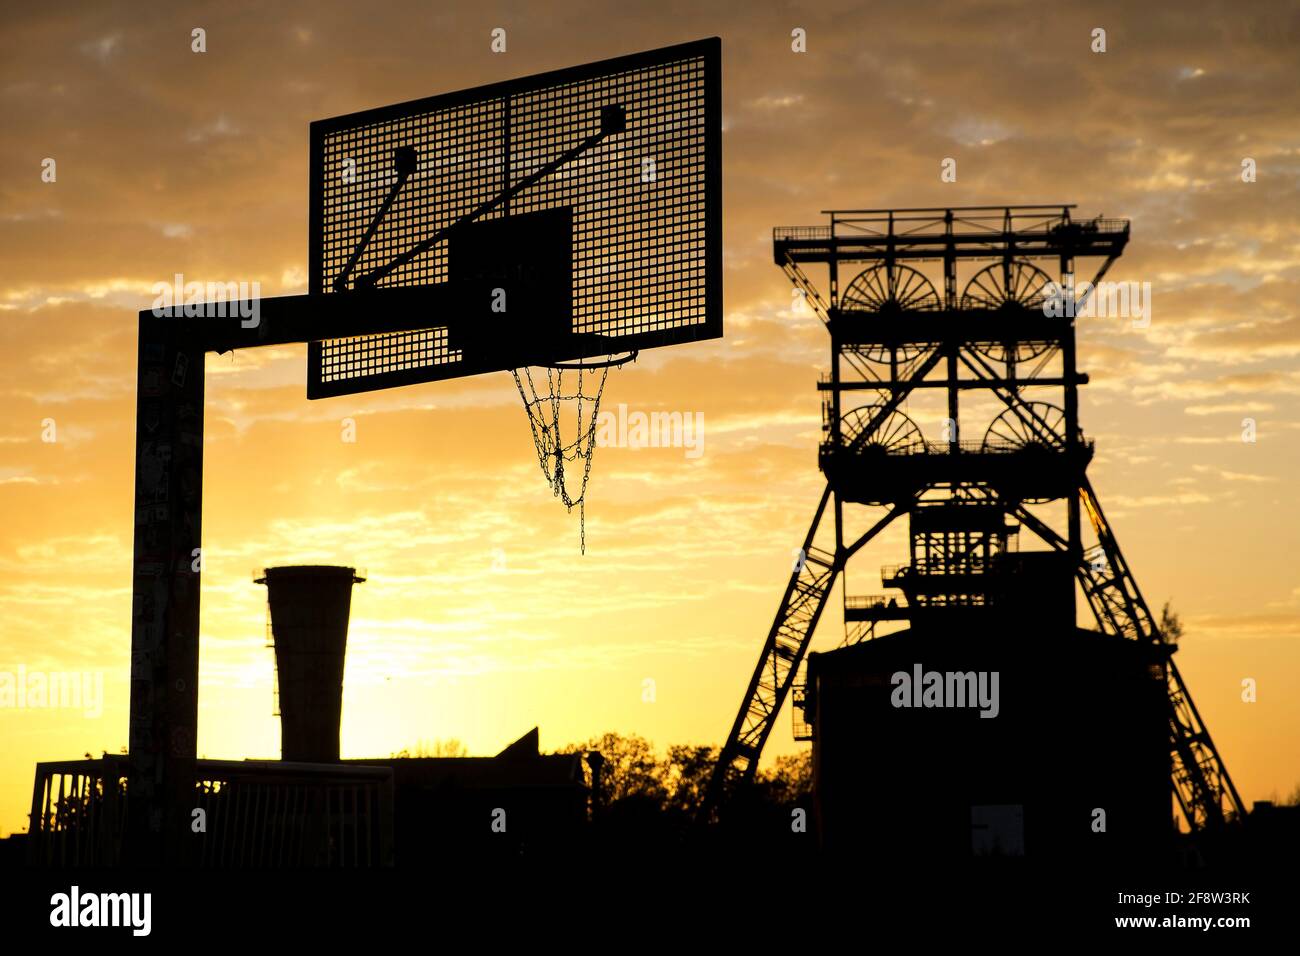 DEU, Deutschland, Nordrhein-Westfalen, Ruhrgebiet, Gelsenkirchen-Bismarck, 02.11.2014: Basketballkorb vor dem Foerderturm der ehemaligen Zeche Consoli Foto Stock